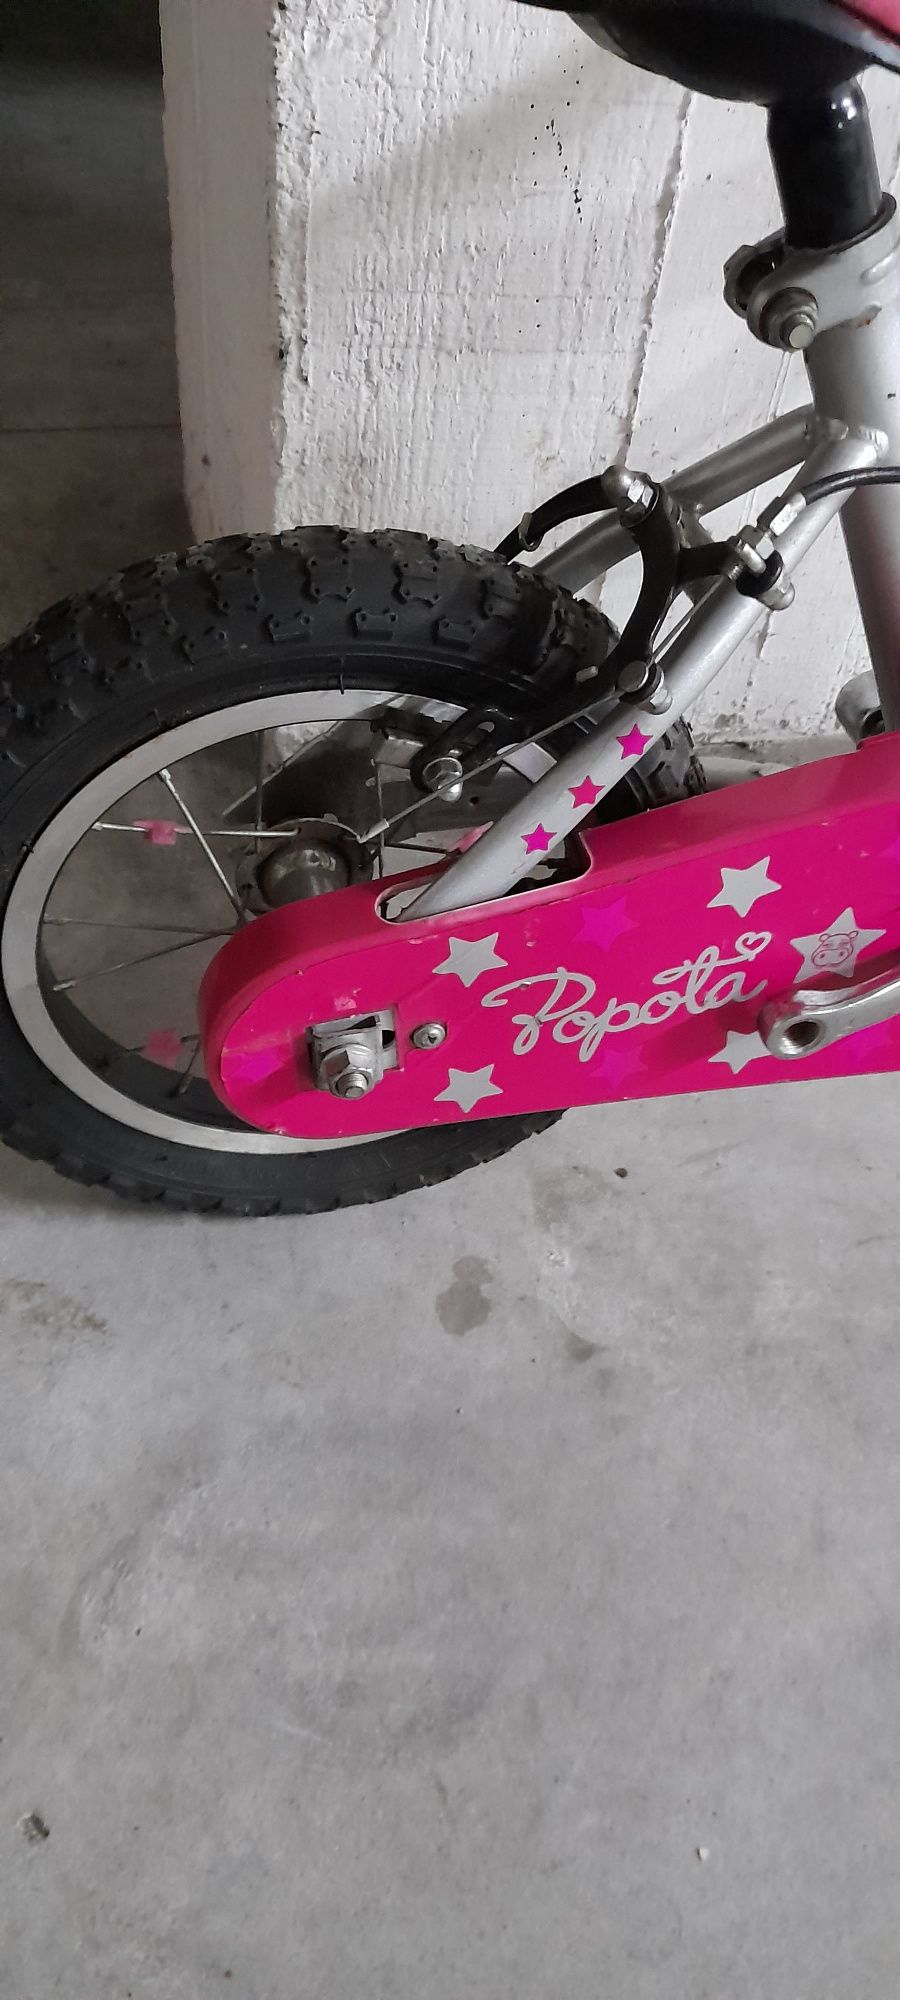 Bicicleta Criança Popota